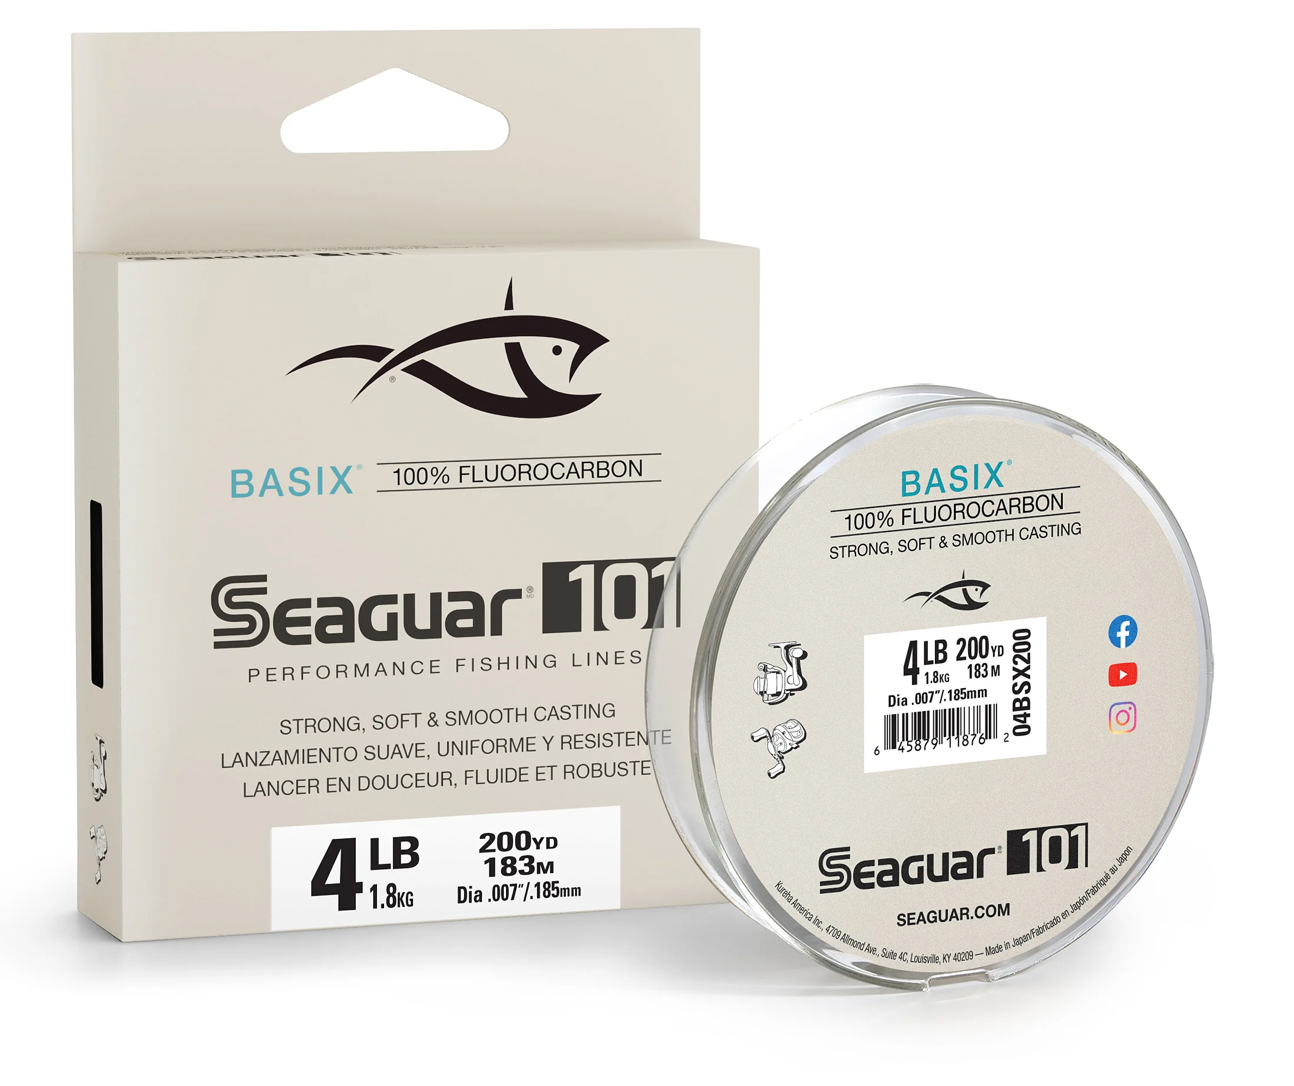 Seaguar Basix 100% 氟碳系列